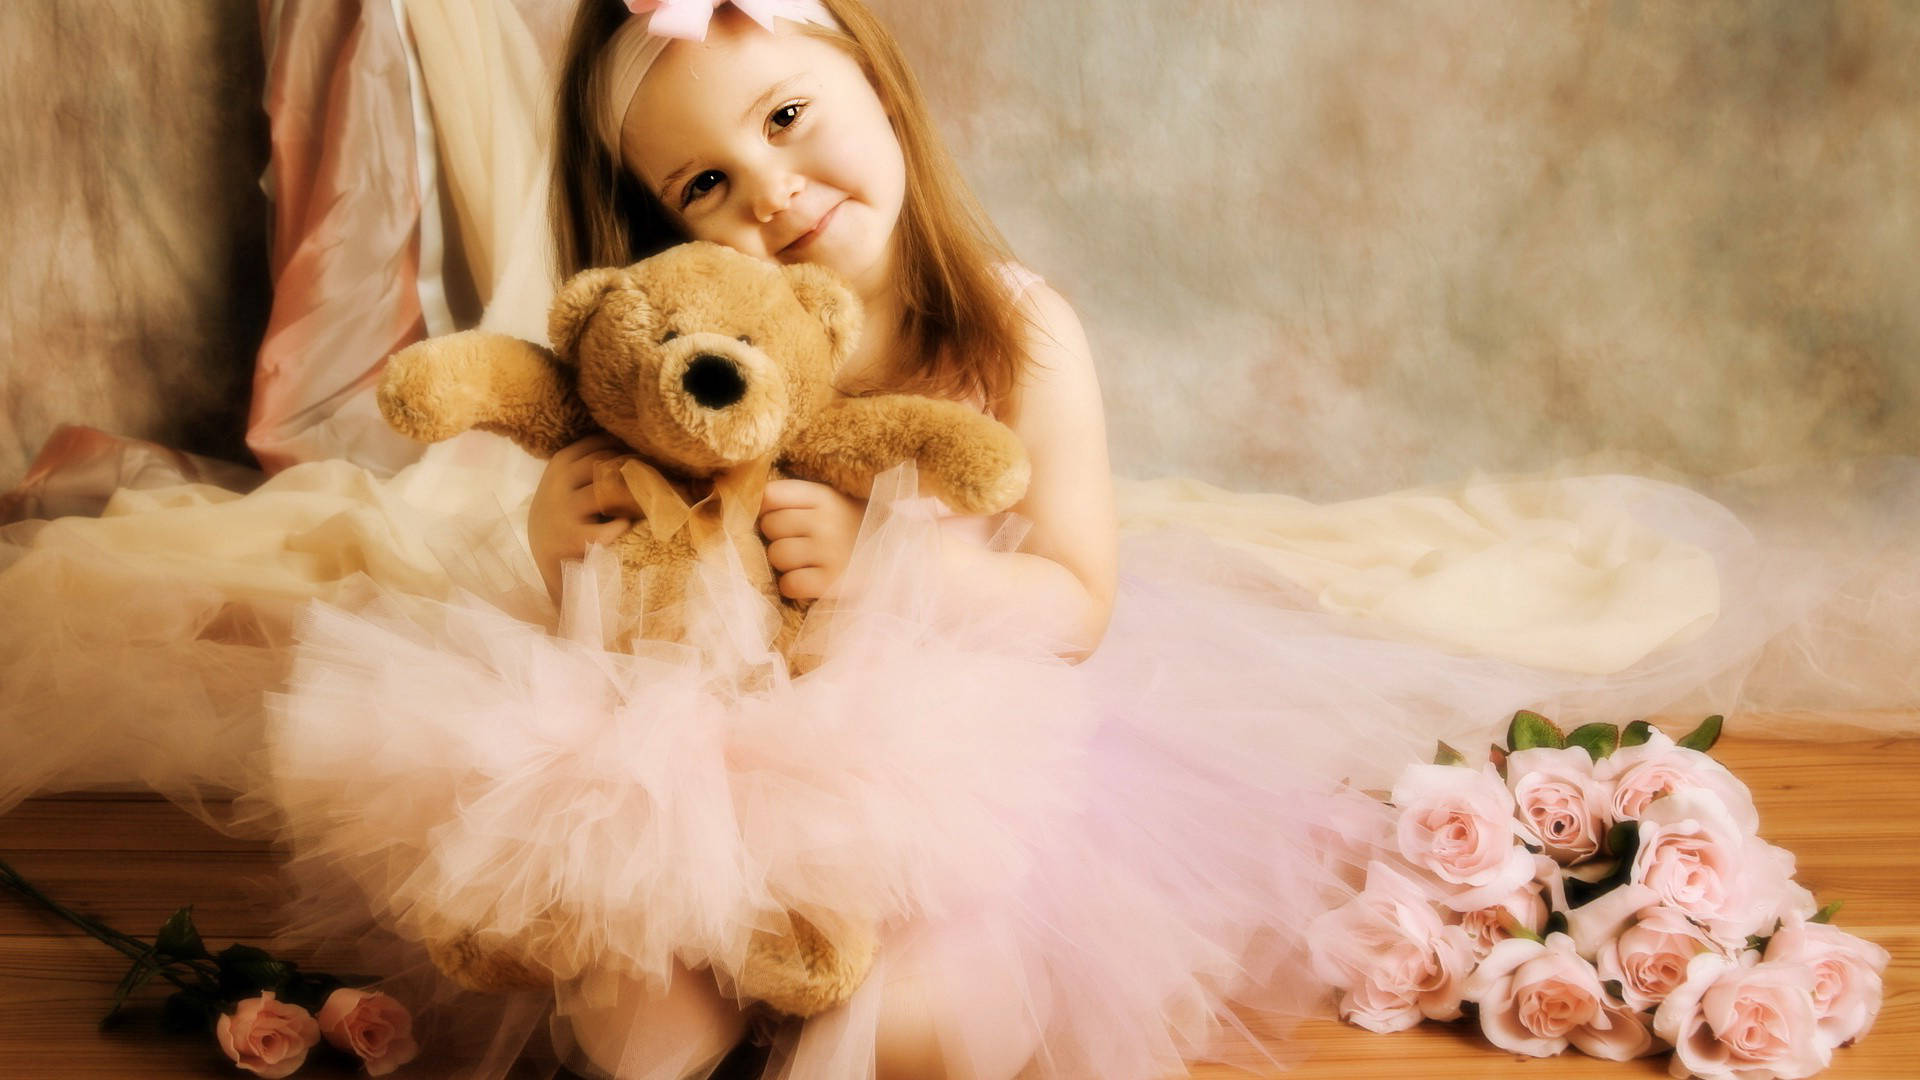 Cute Flower Girl With Teddy Bear Background